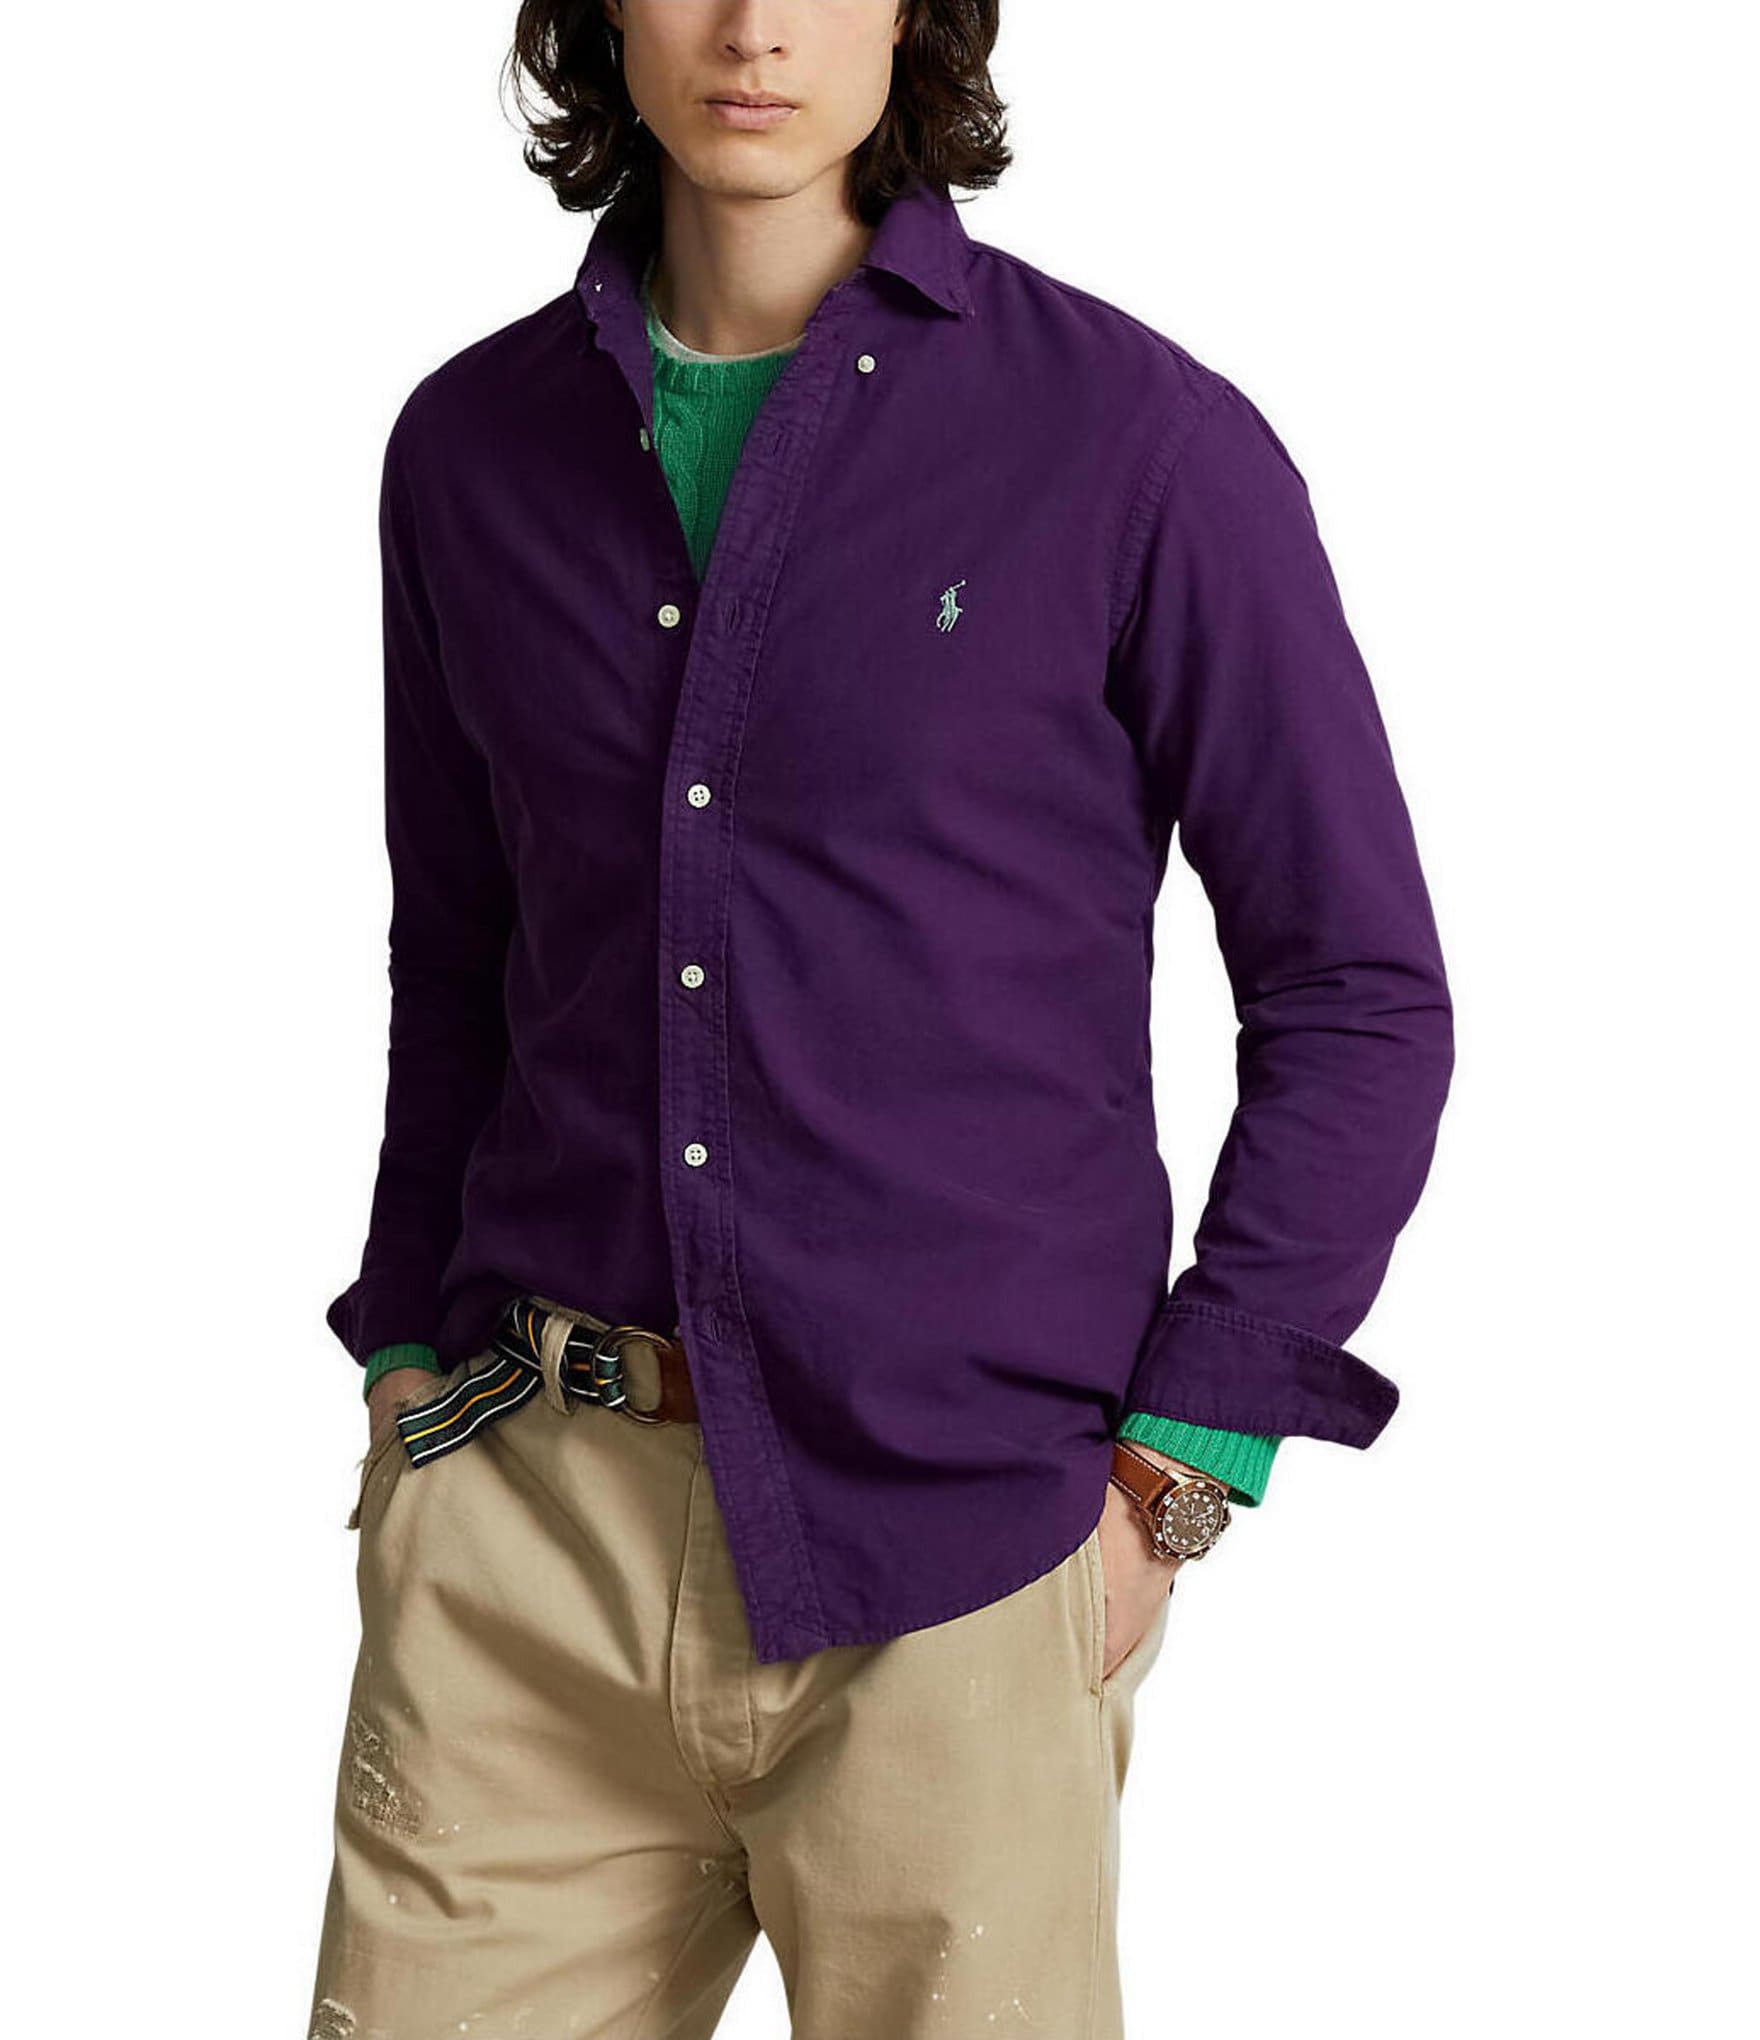 Long Sleeve Auburn Frat Tattersall Shirt, Men's Size Medium | Drake